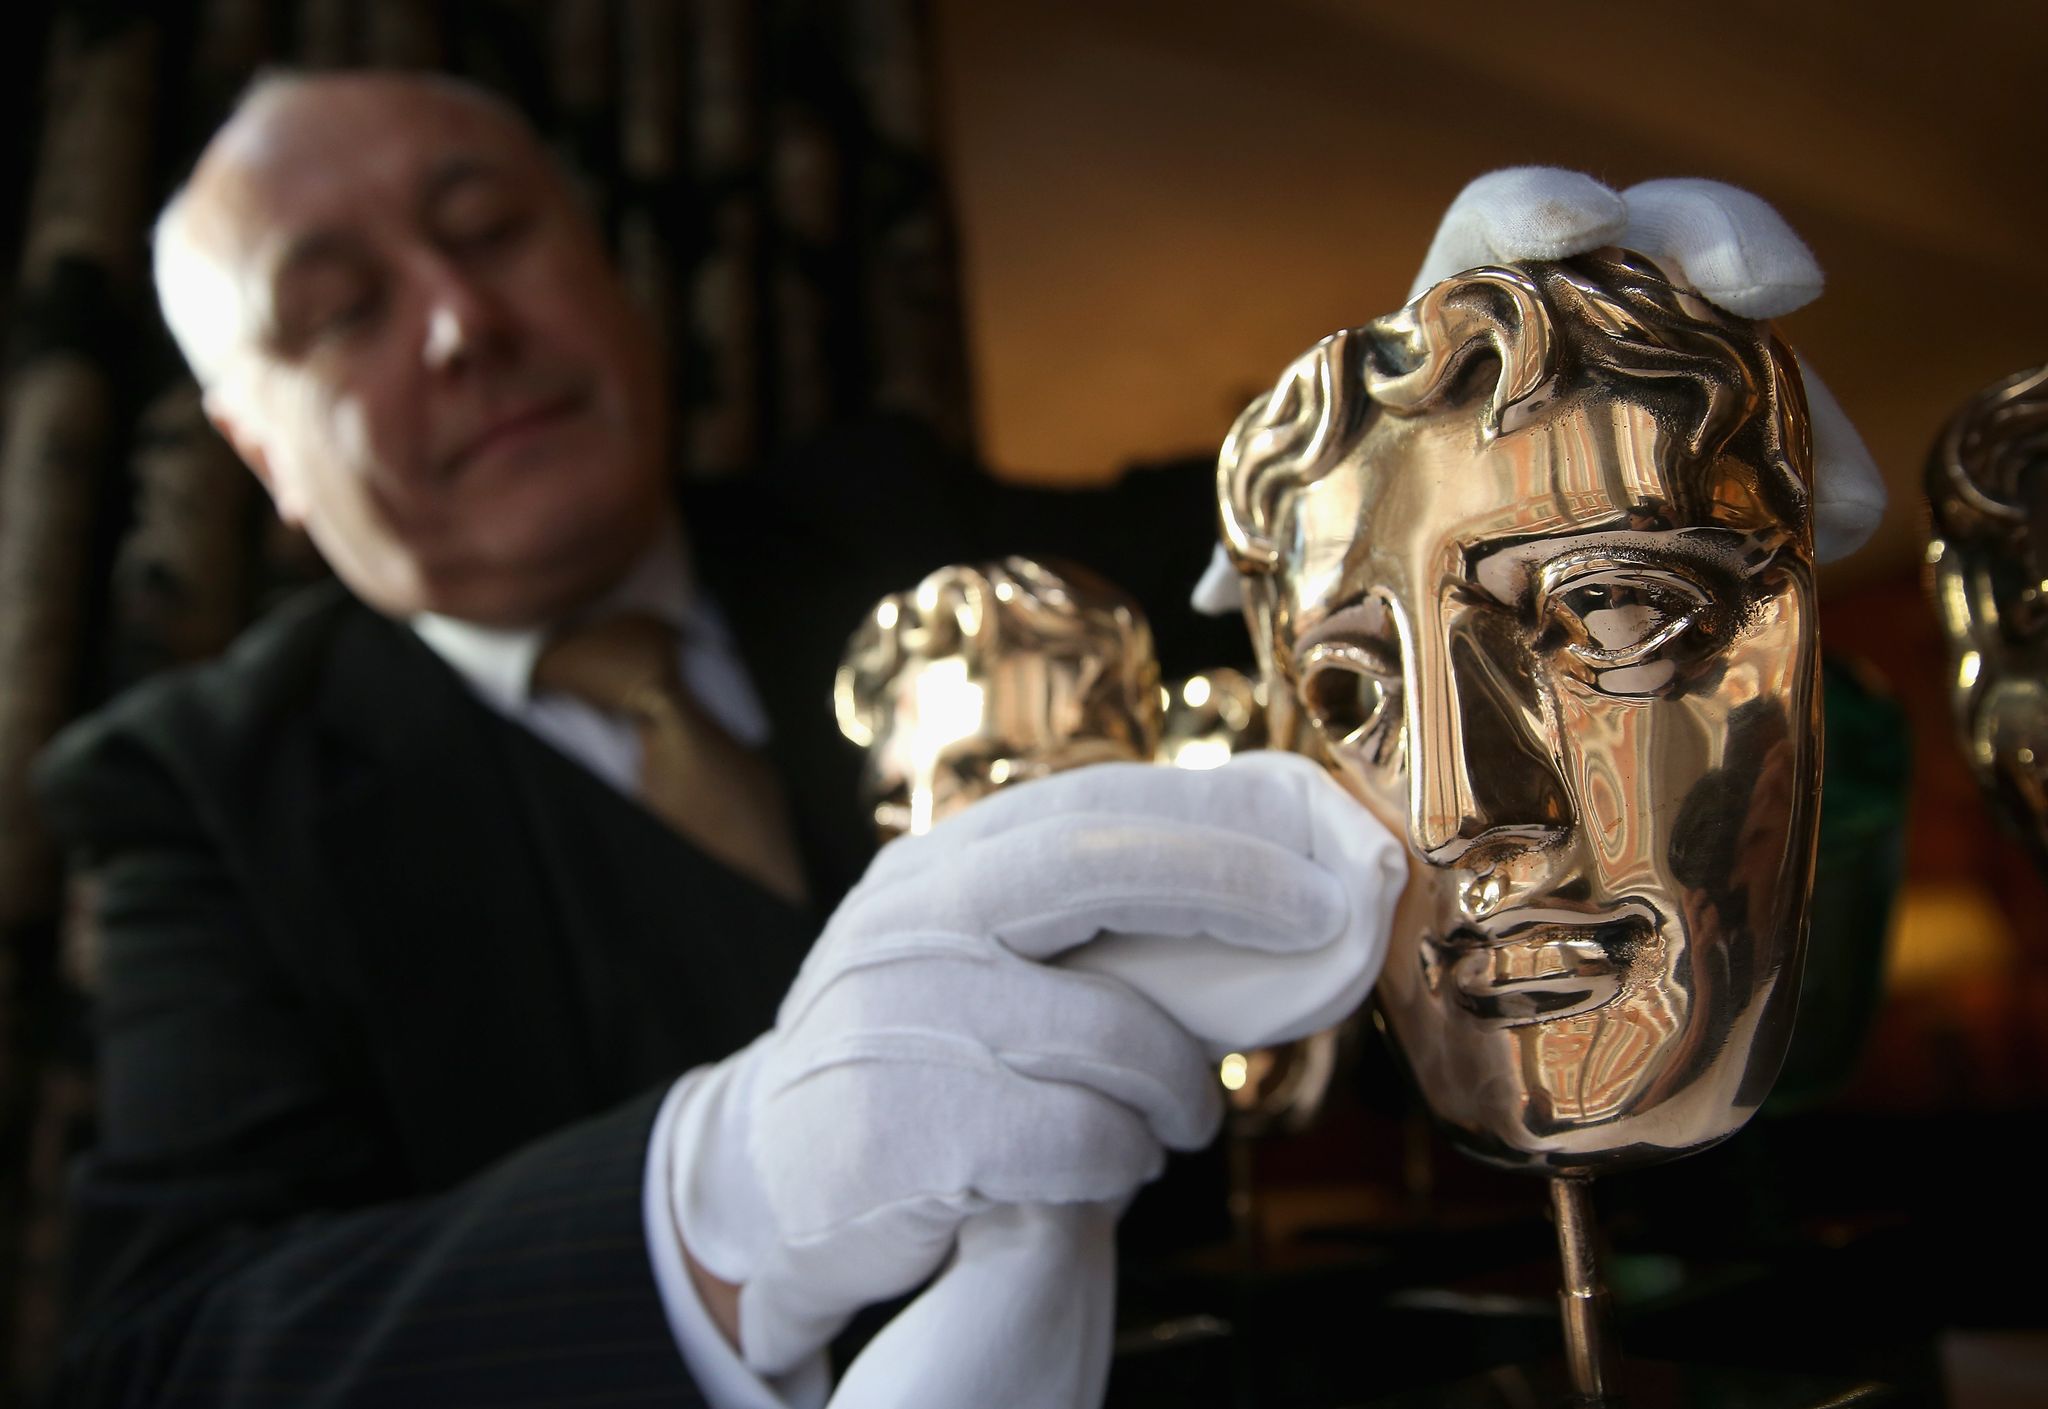 bafta awards previews   mask buffing